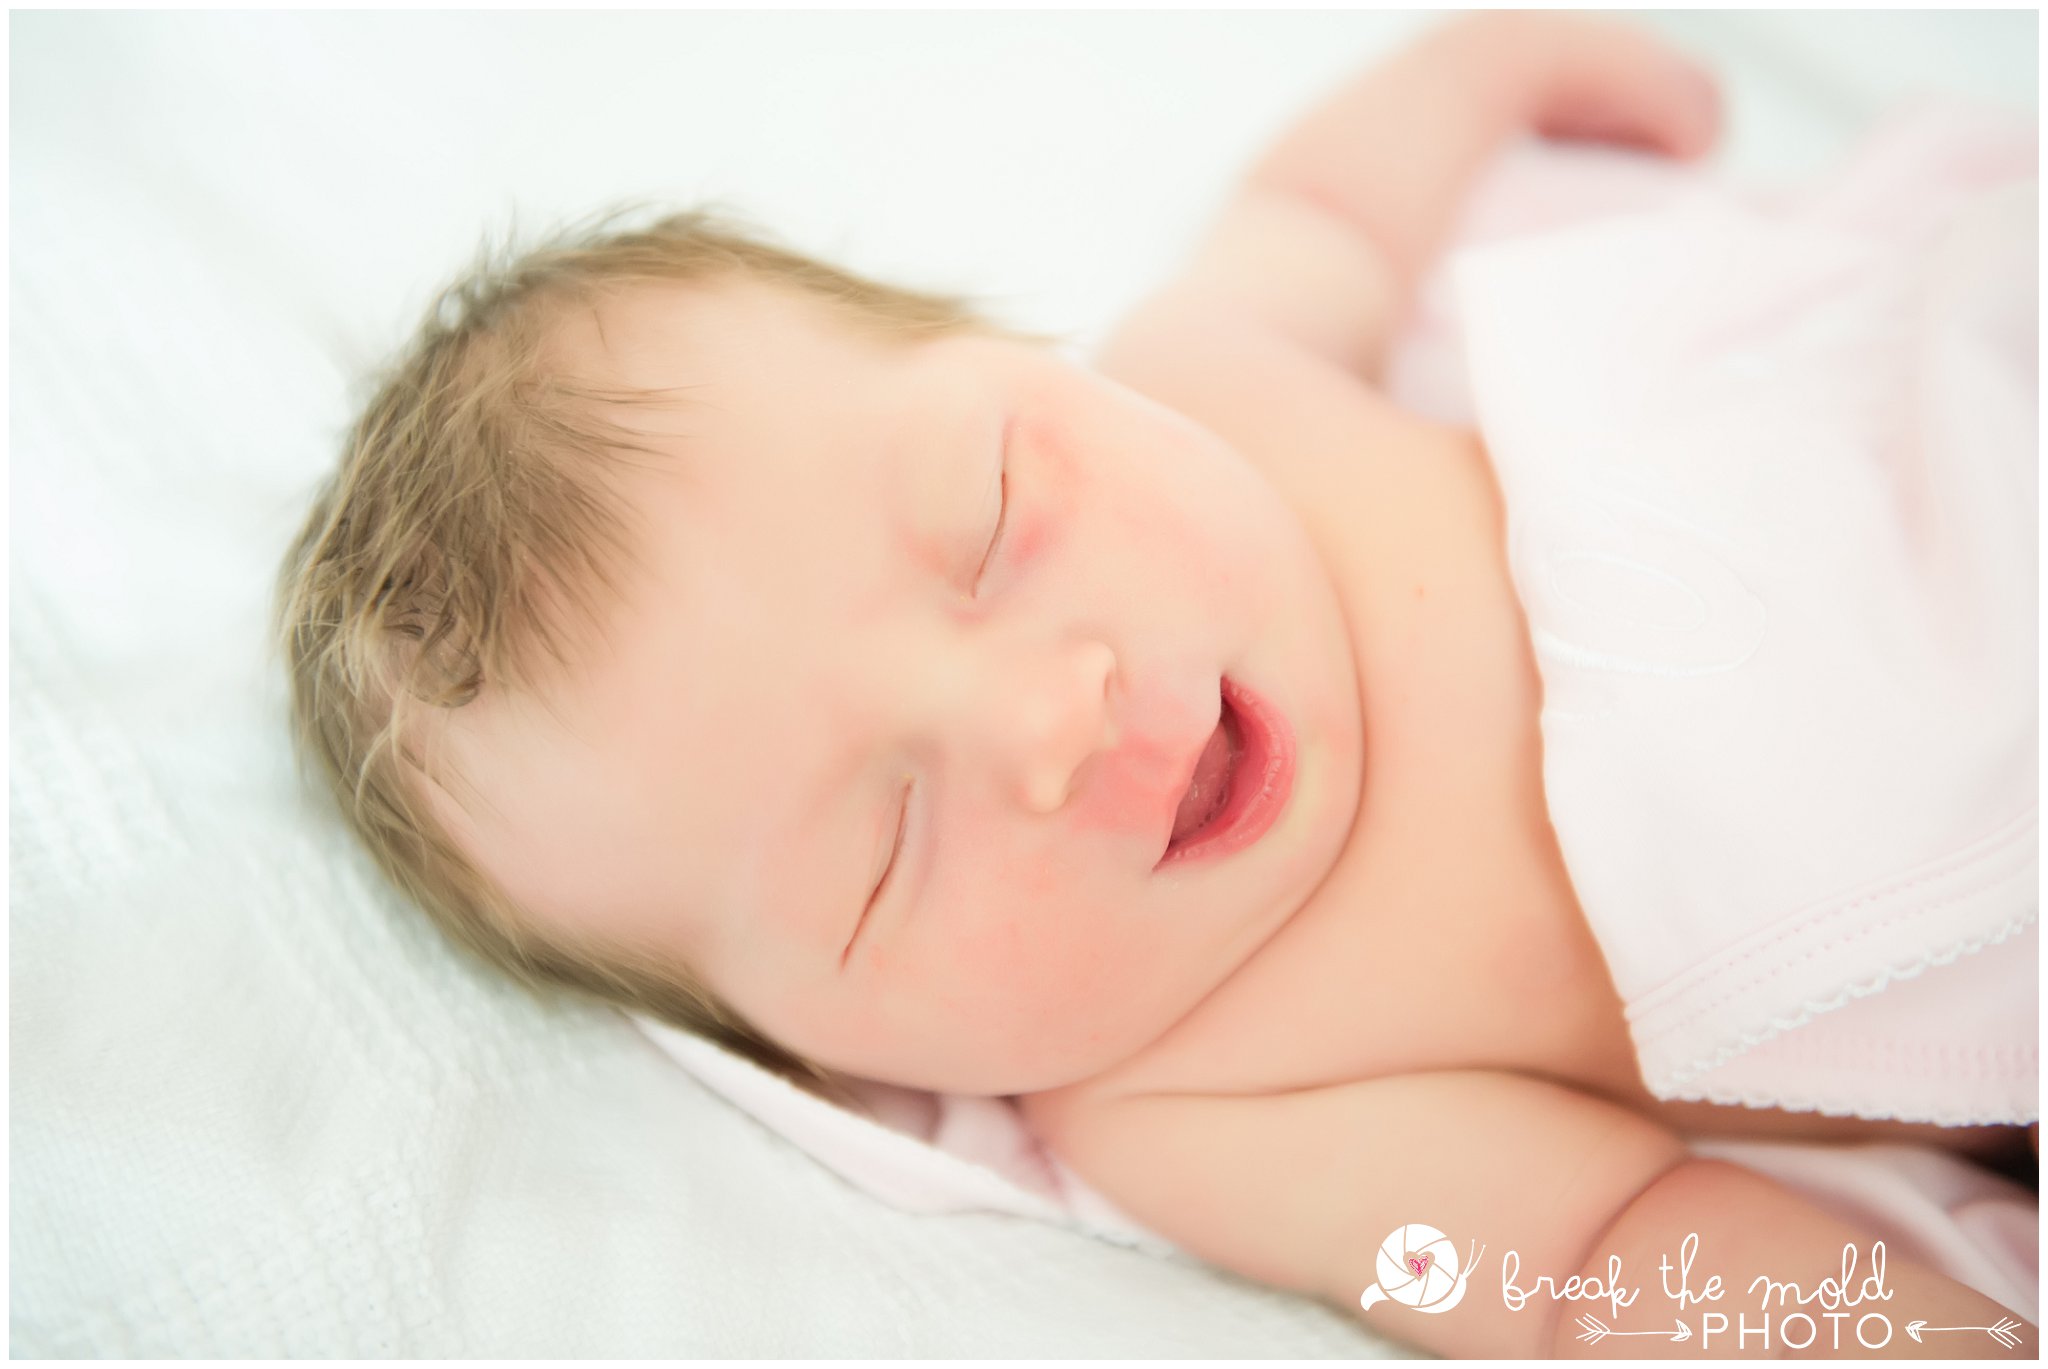 fresh-24-newborn-in-hospital-break-the-mold-photo-baby-girl-sweet-in-room-photos (27).jpg